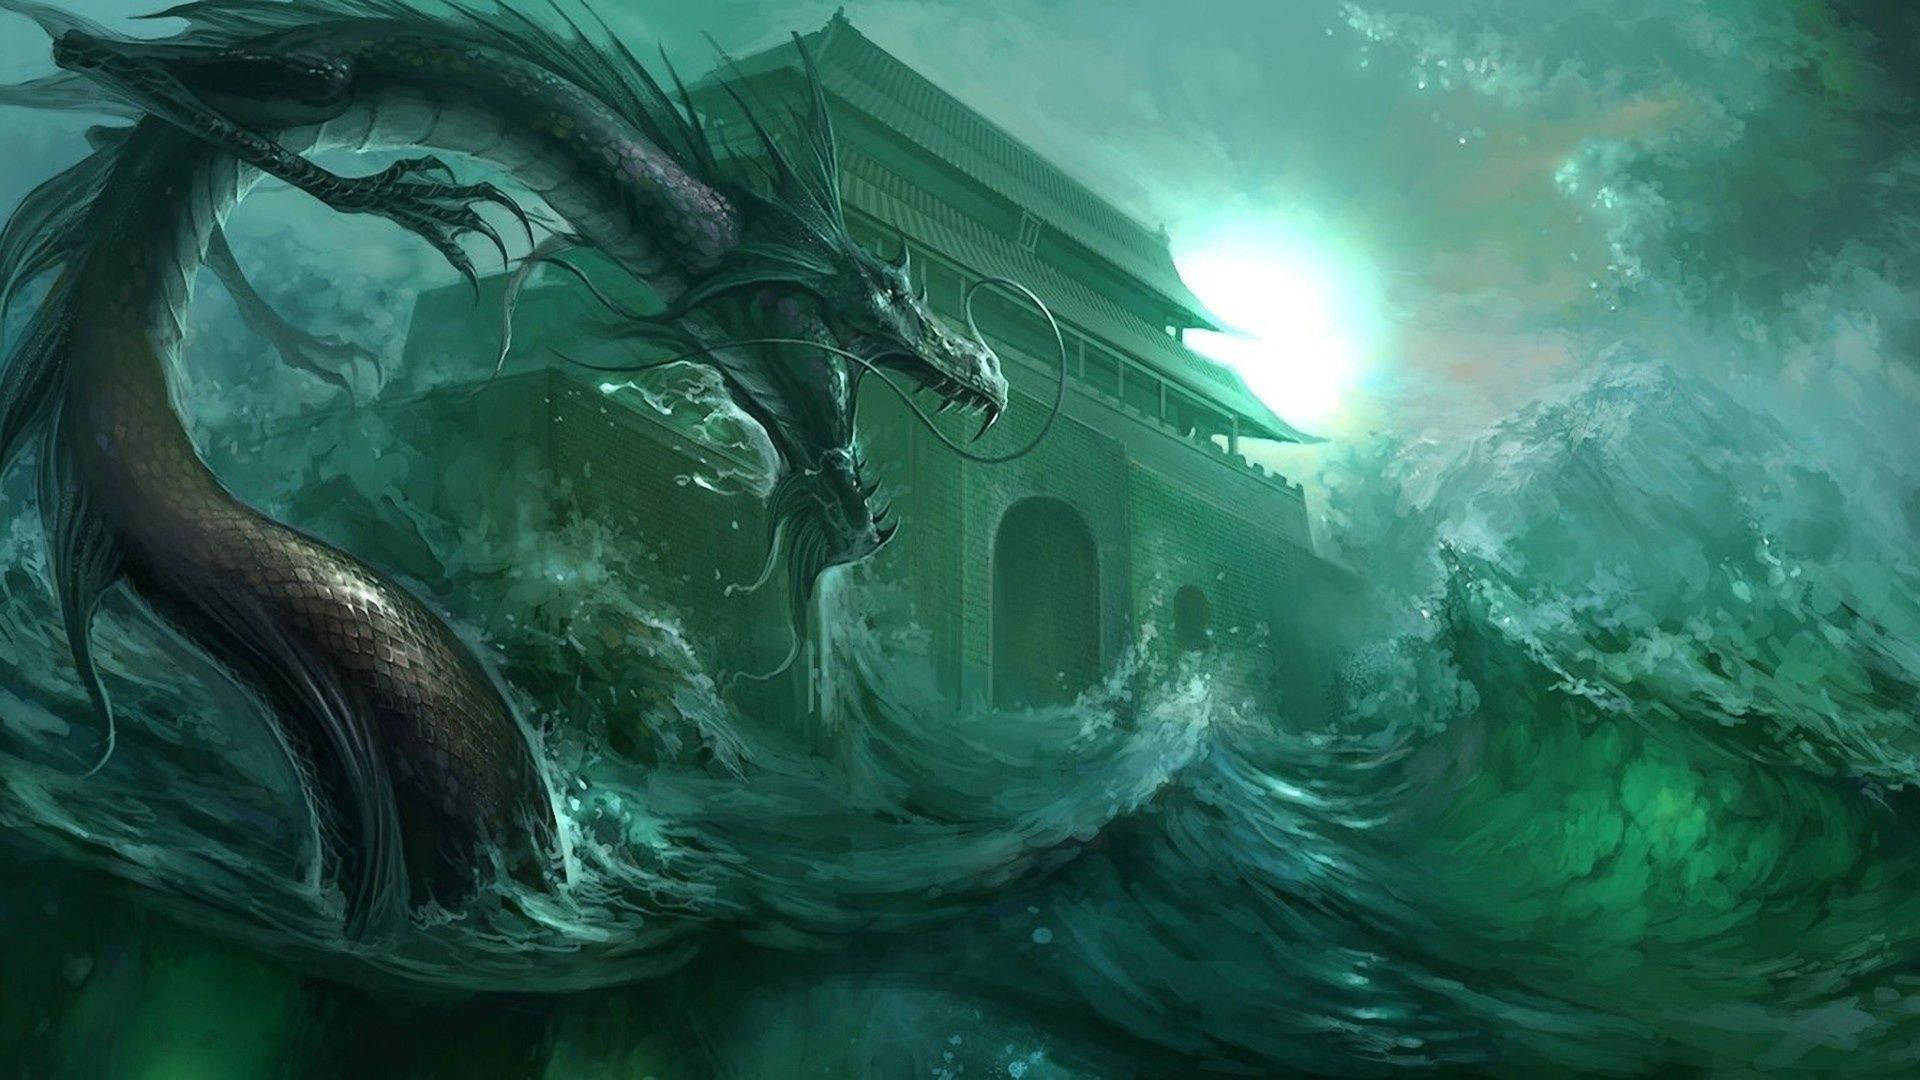 Eastern Dragon Raging Waves Background